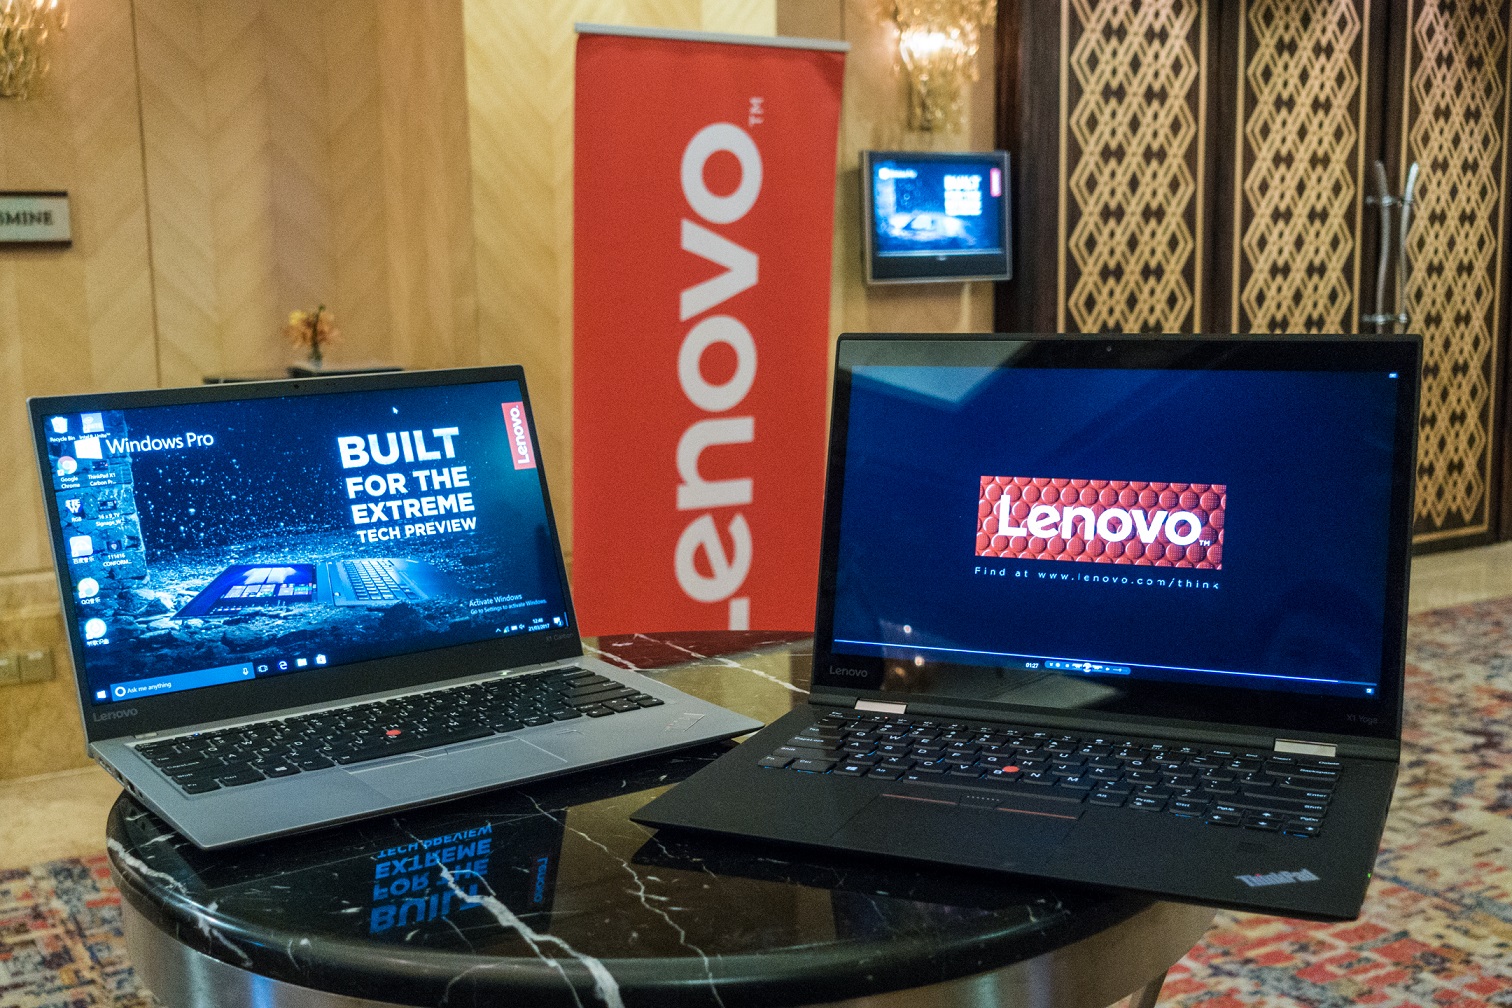 Lenovo puts its money on the PC market